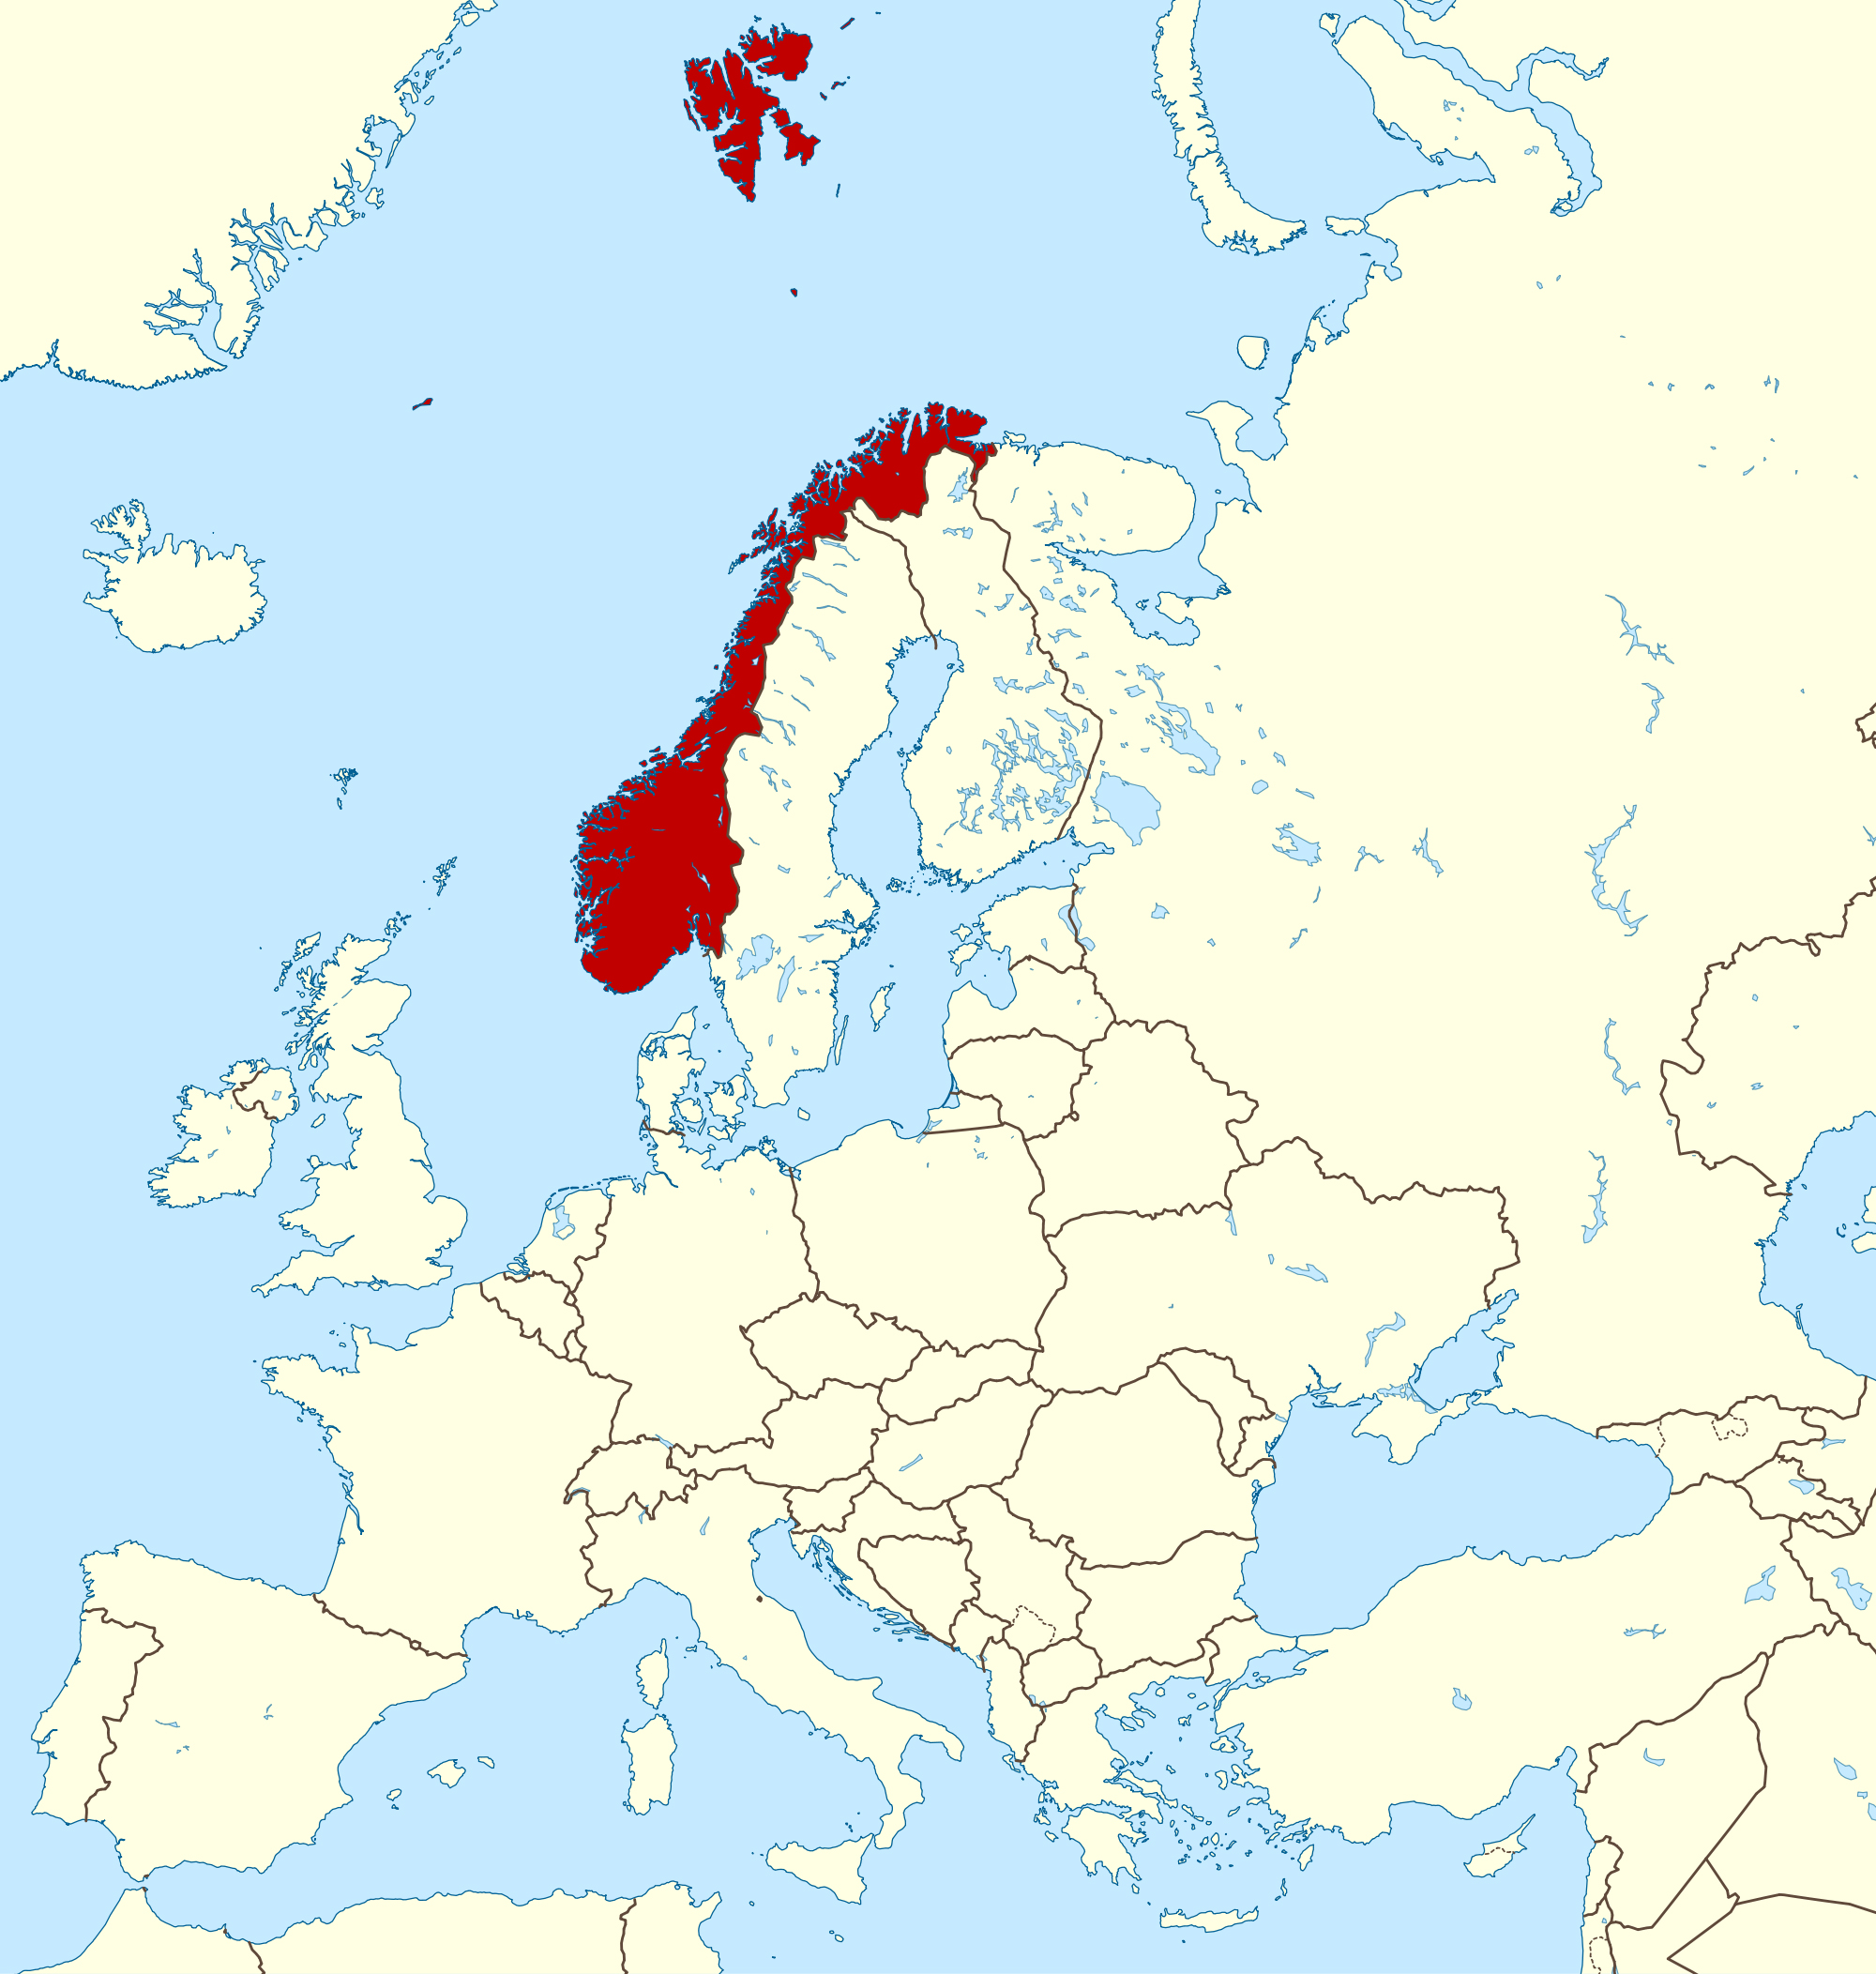  /><br/><p>Europe Map Norway</p></center></div>
<script type='text/javascript'>
var obj0=document.getElementById(